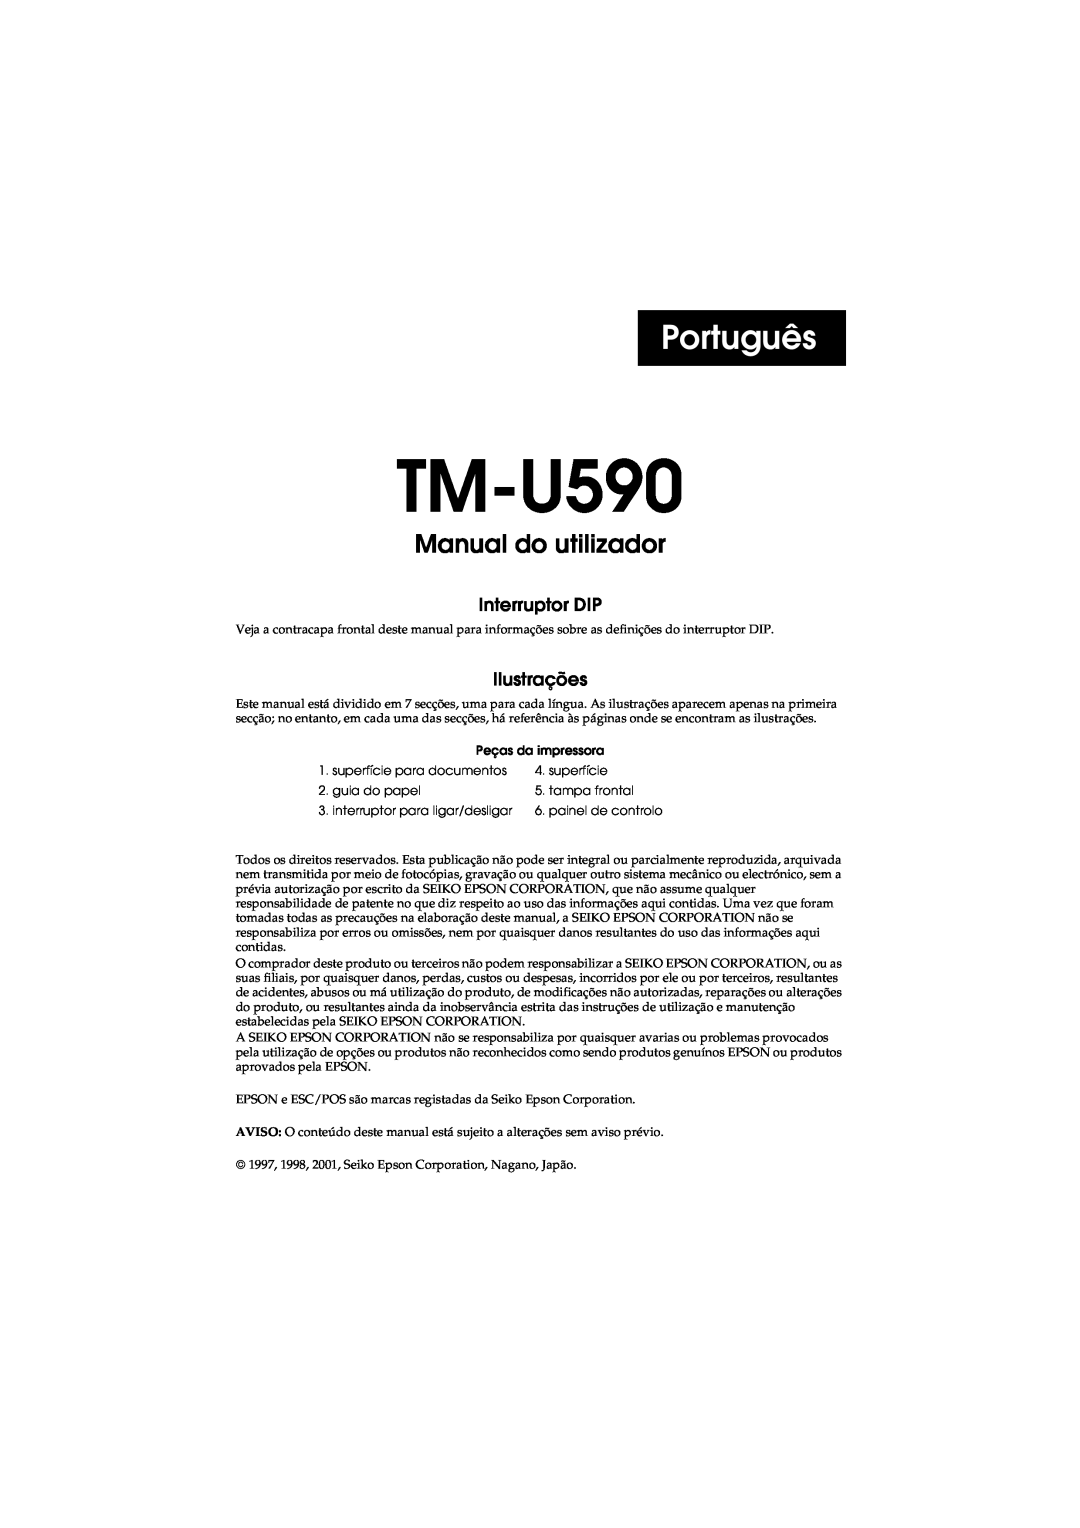 FARGO electronic user manual Português, TM-U590 Manual do utilizador, Interruptor DIP, Ilustrações 